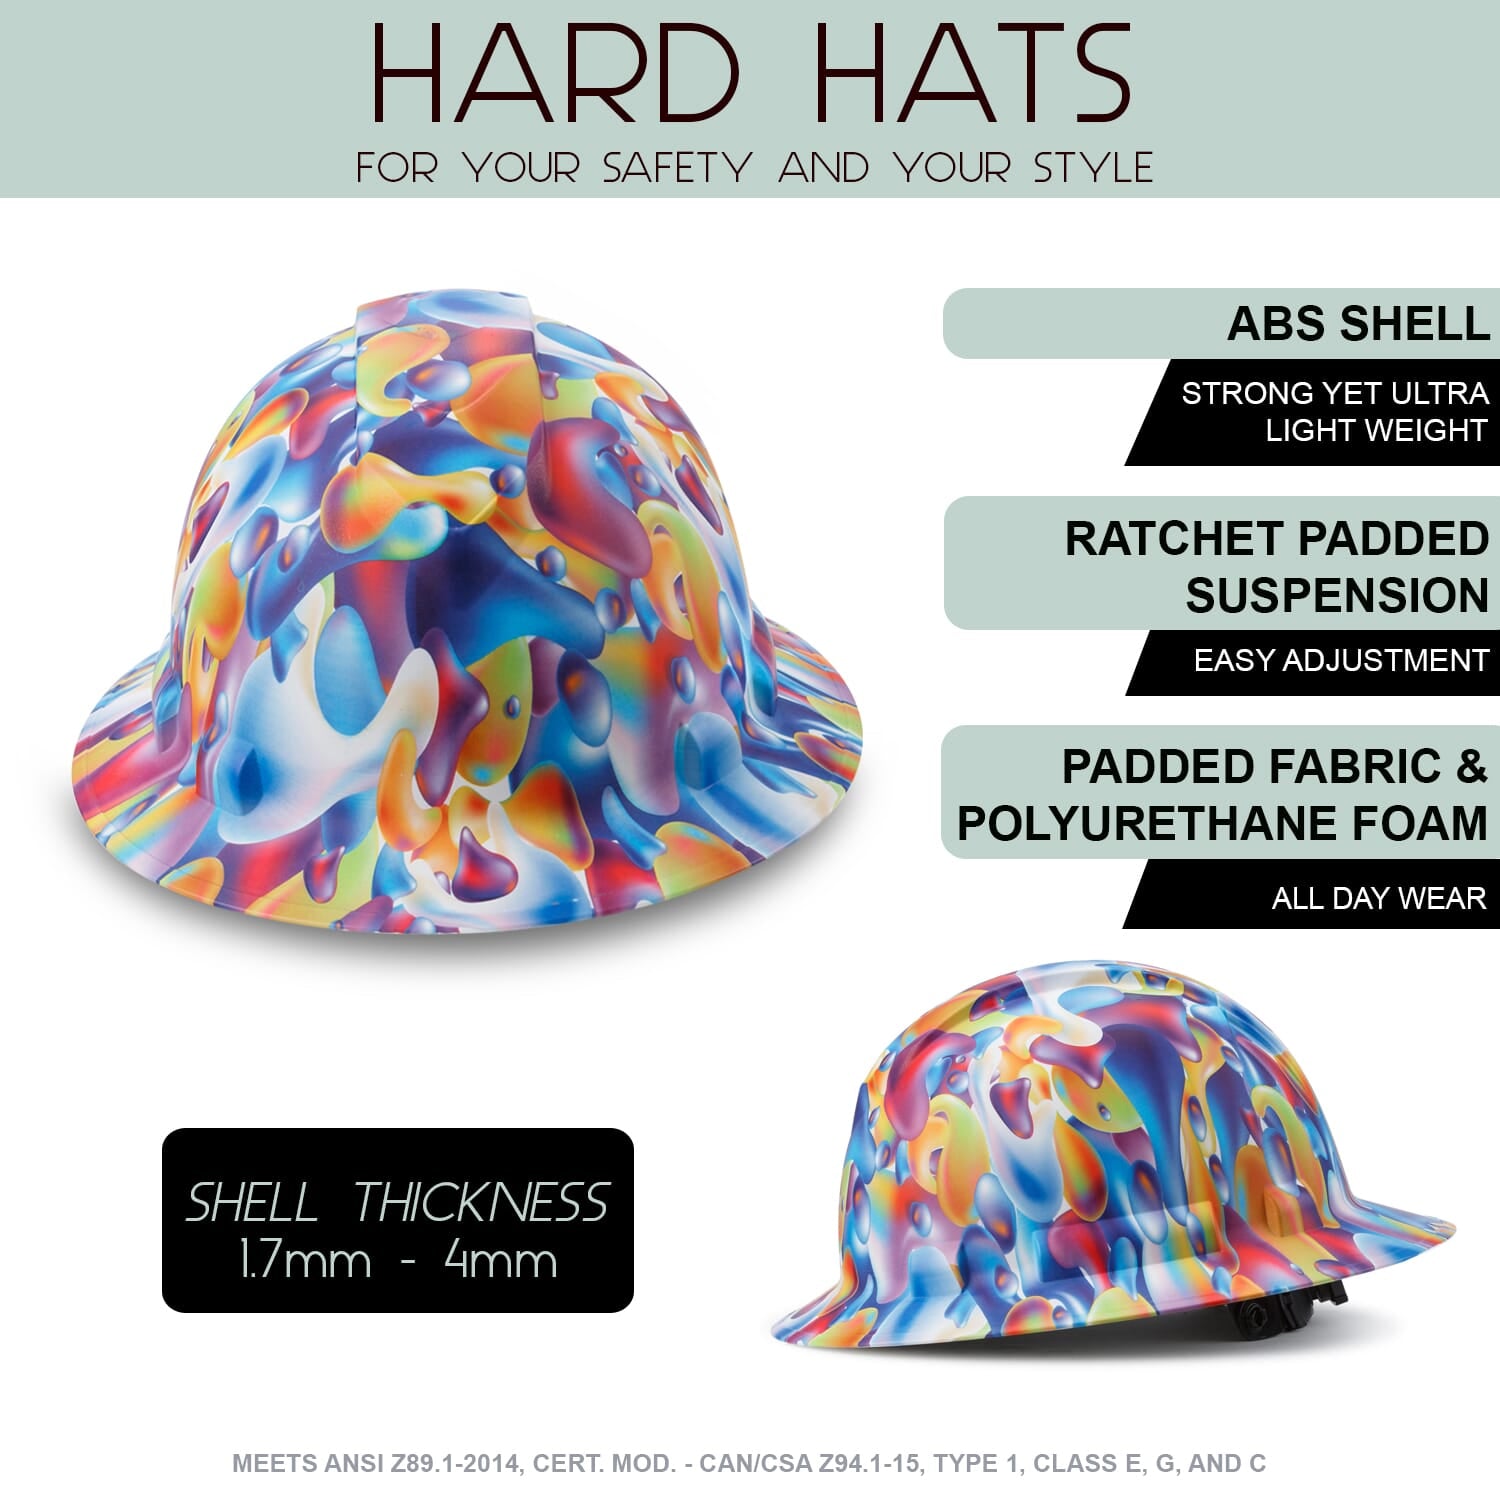 Full Brim Pyramex Hard Hat, Custom Color Bubbles Design, Safety Helmet, 6 Point